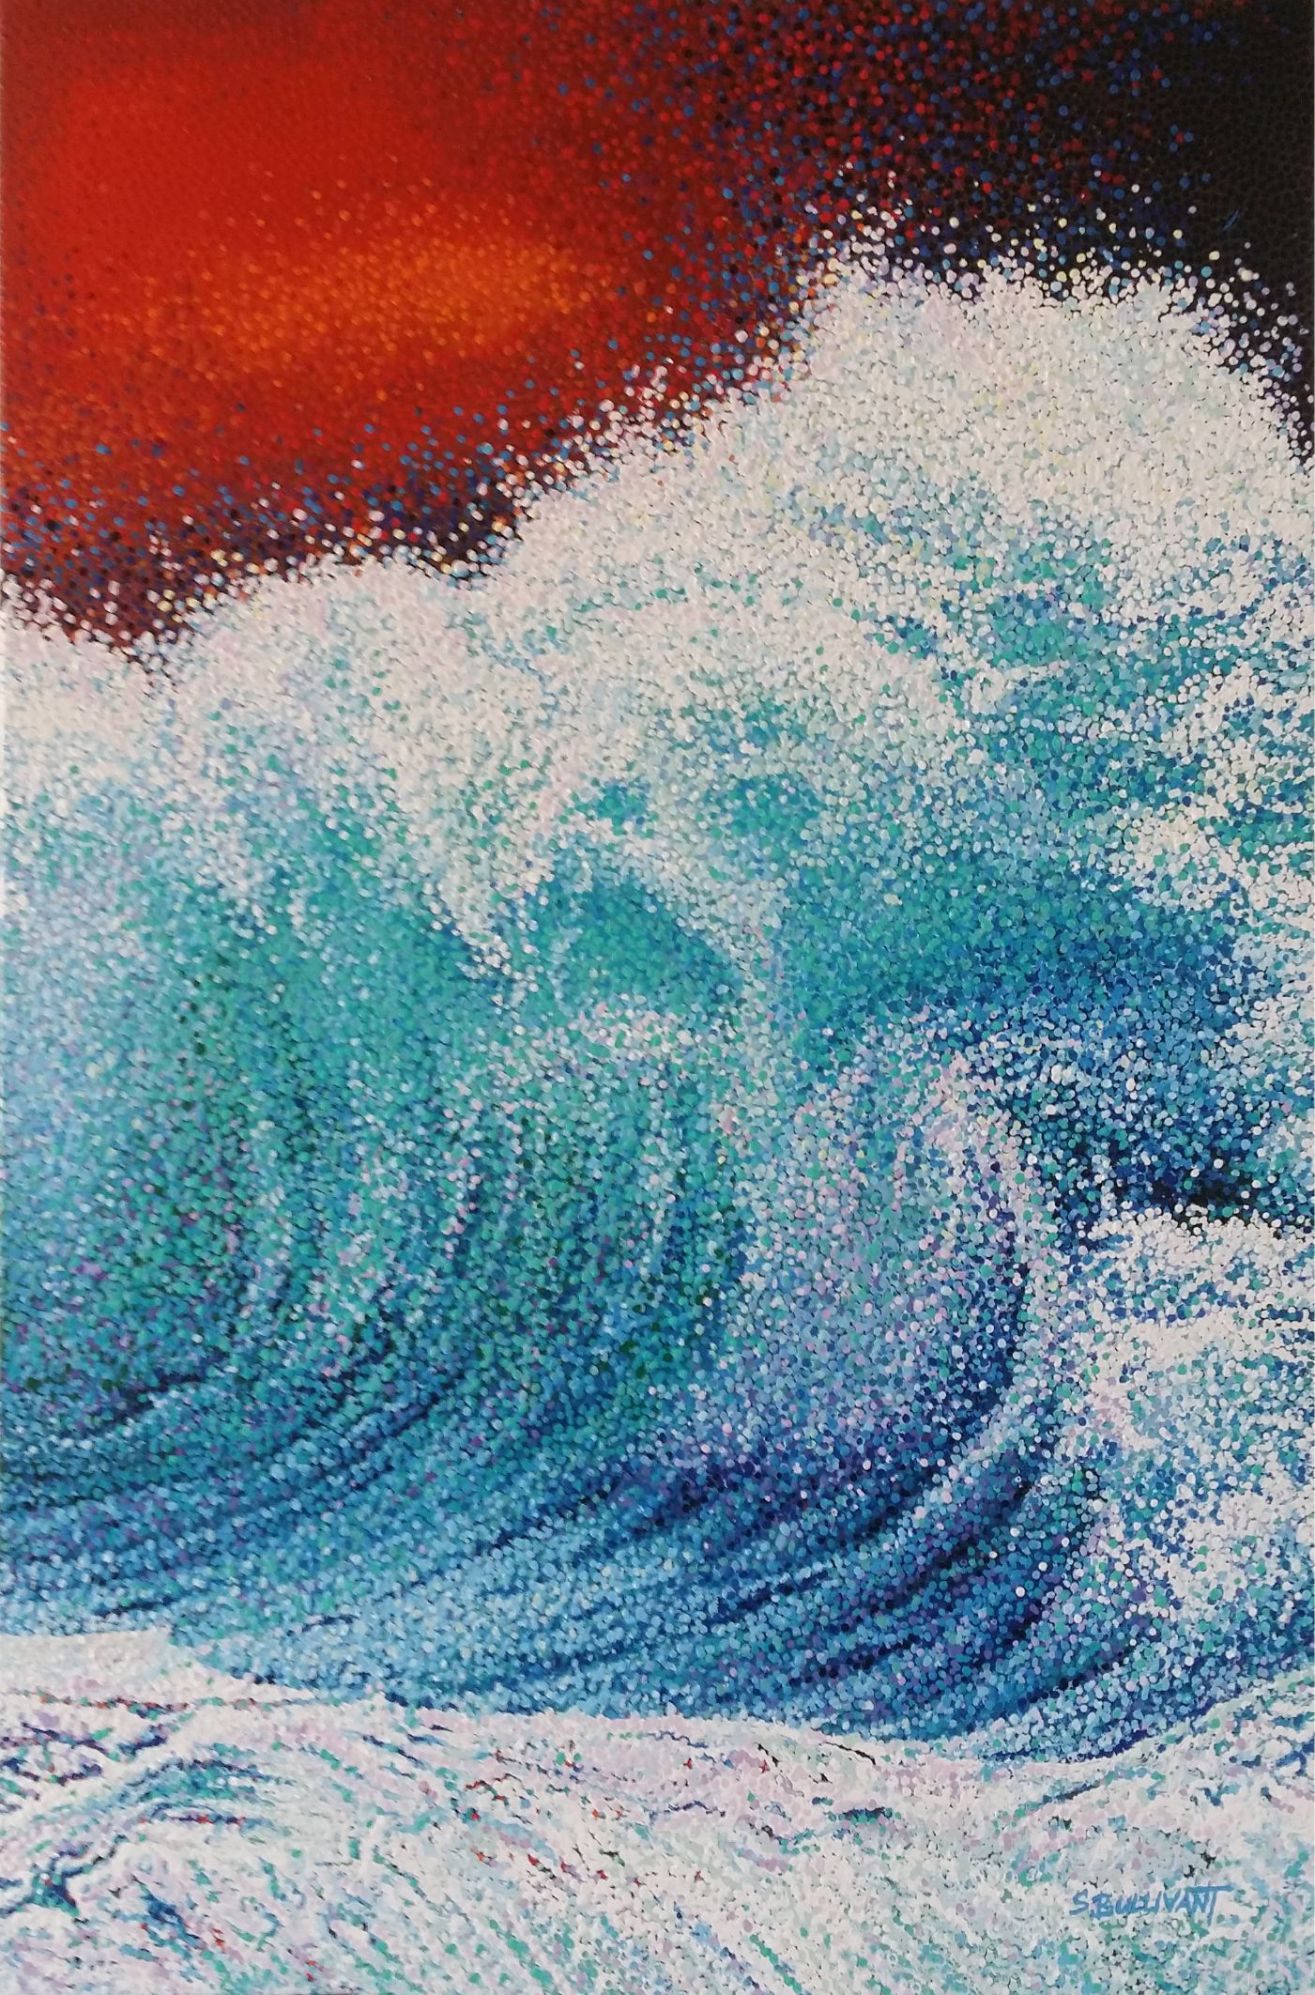 Sea Wave